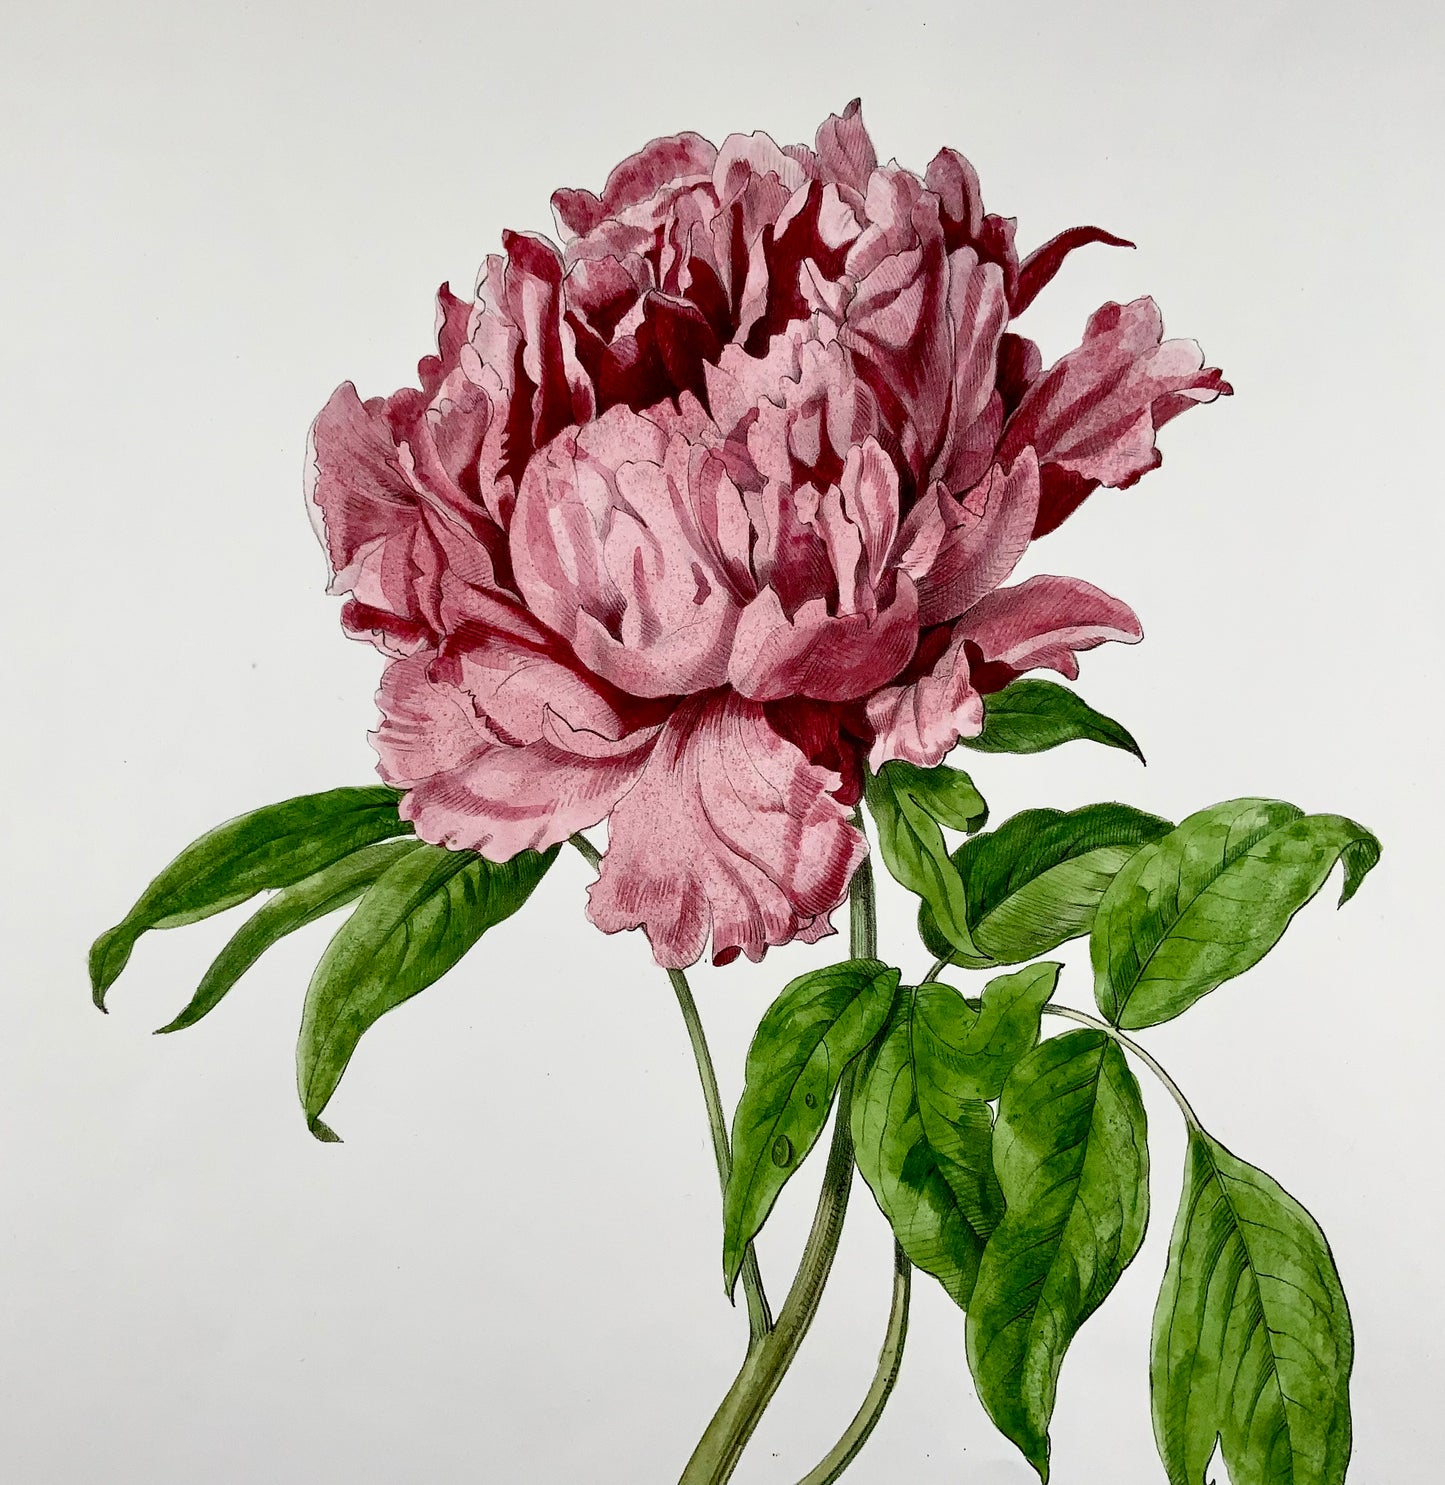 1860c Anton Hartinger, Paeonia Rose, litografia su pietra colorata a mano, folio, botanica